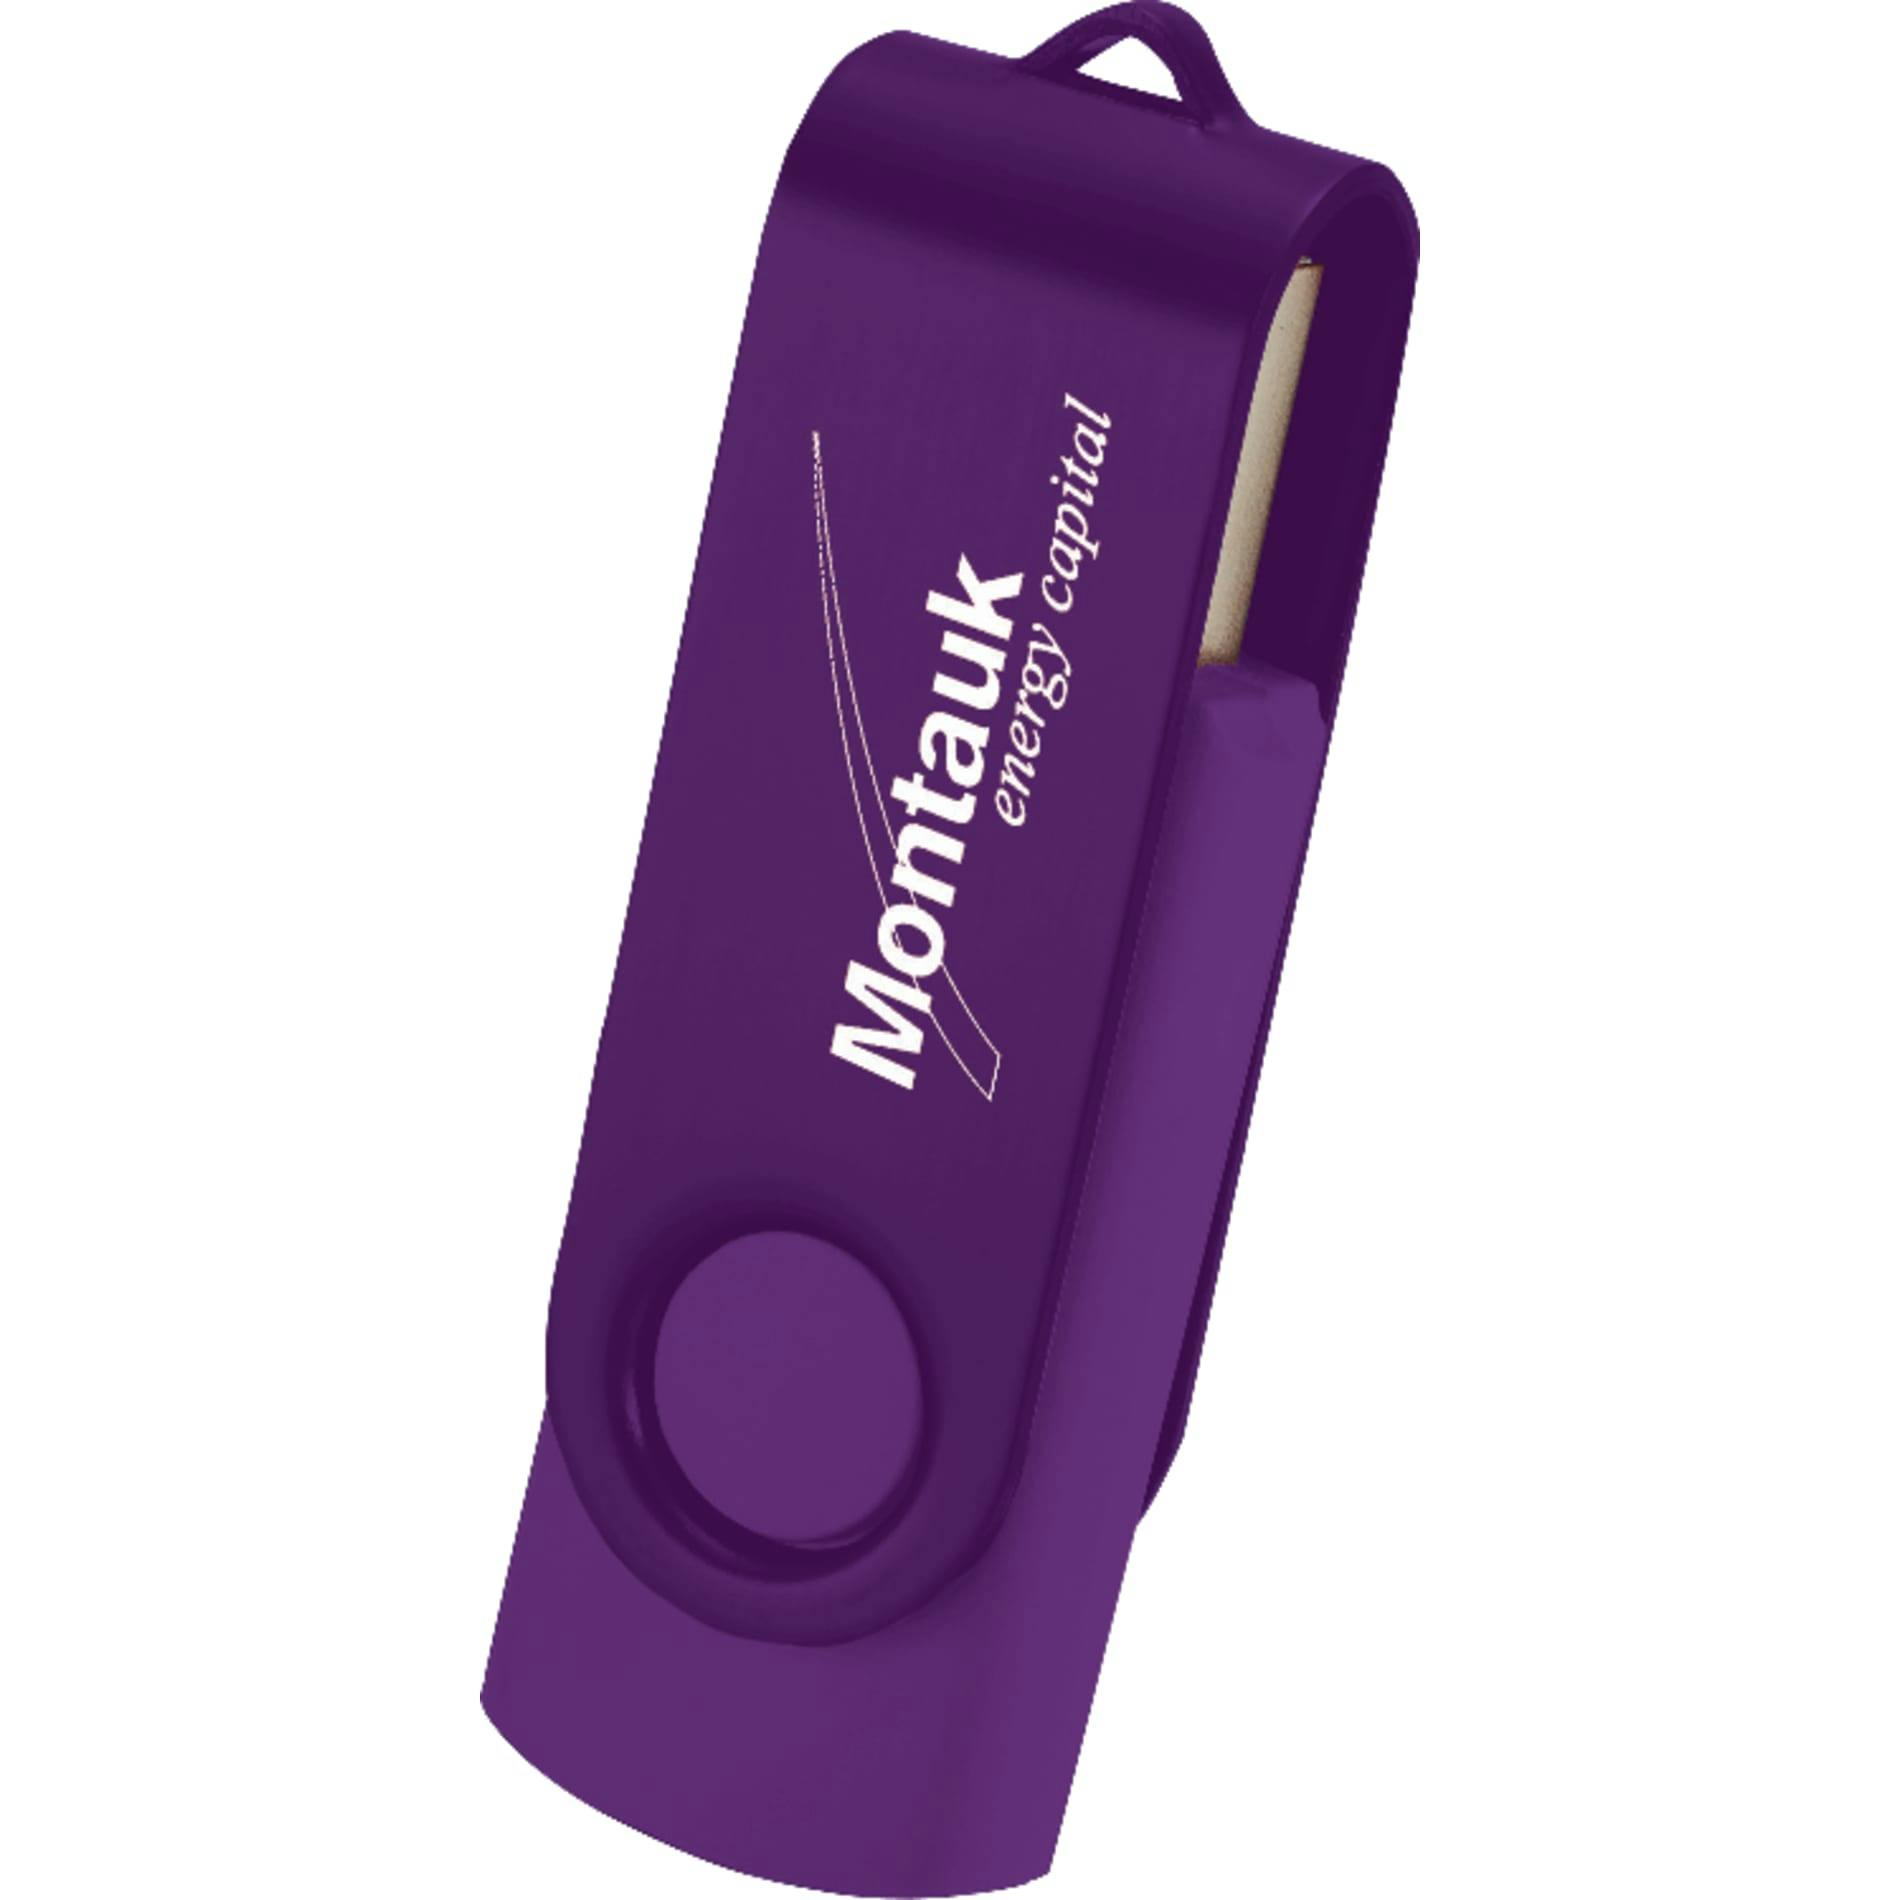 Rotate 2Tone Flash Drive 2GB - additional Image 1